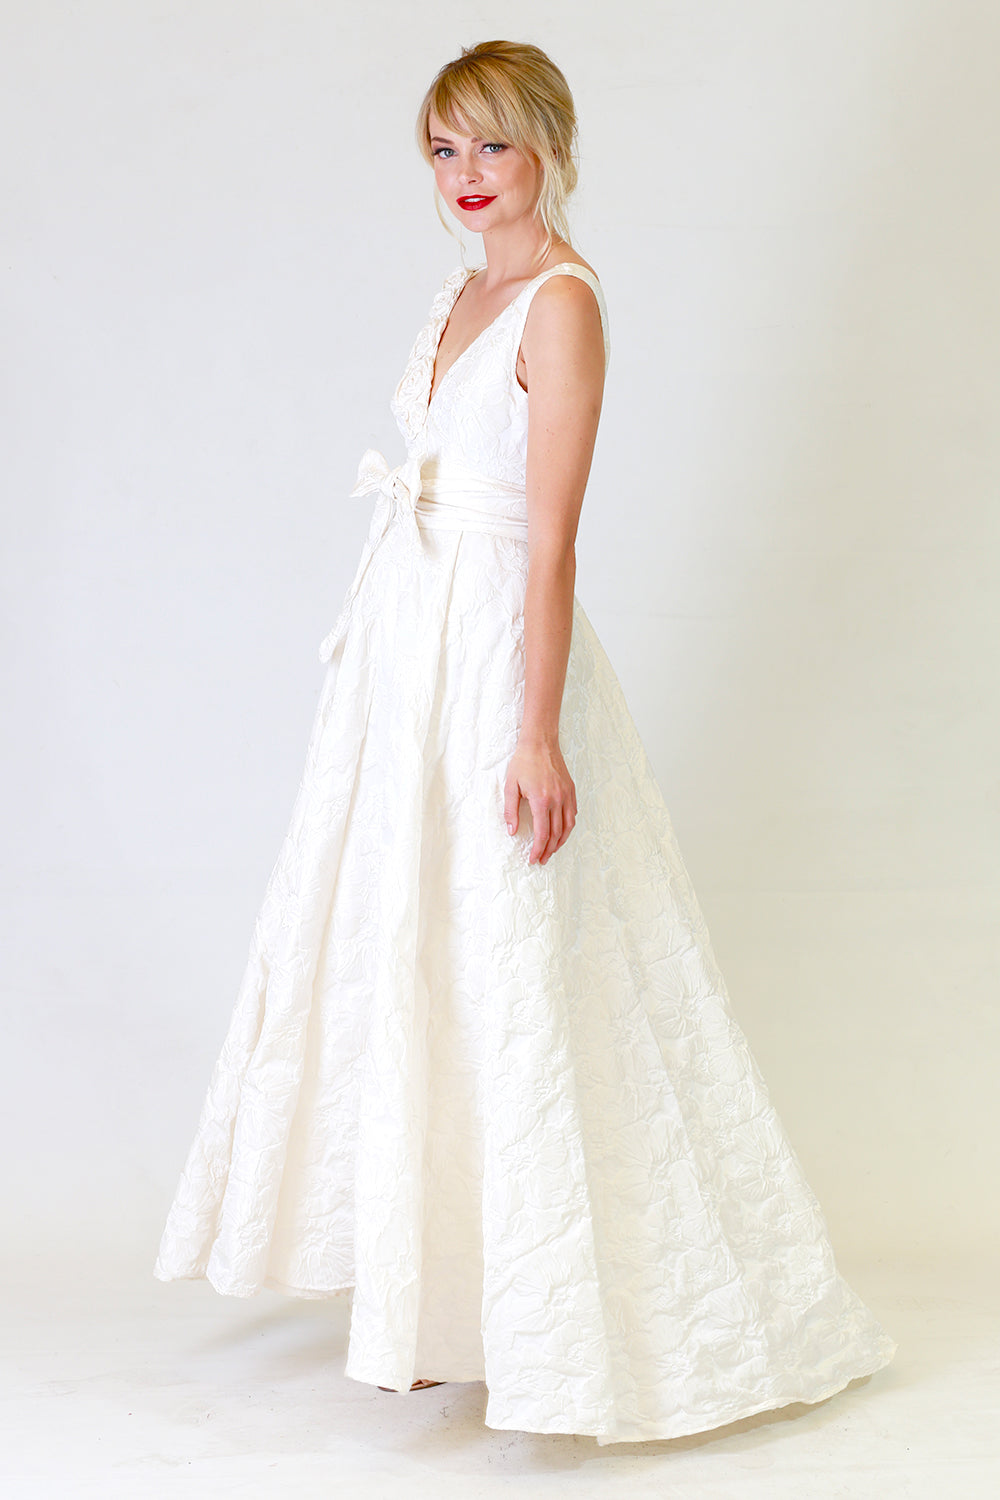 baby didion genevieve wedding dress in white